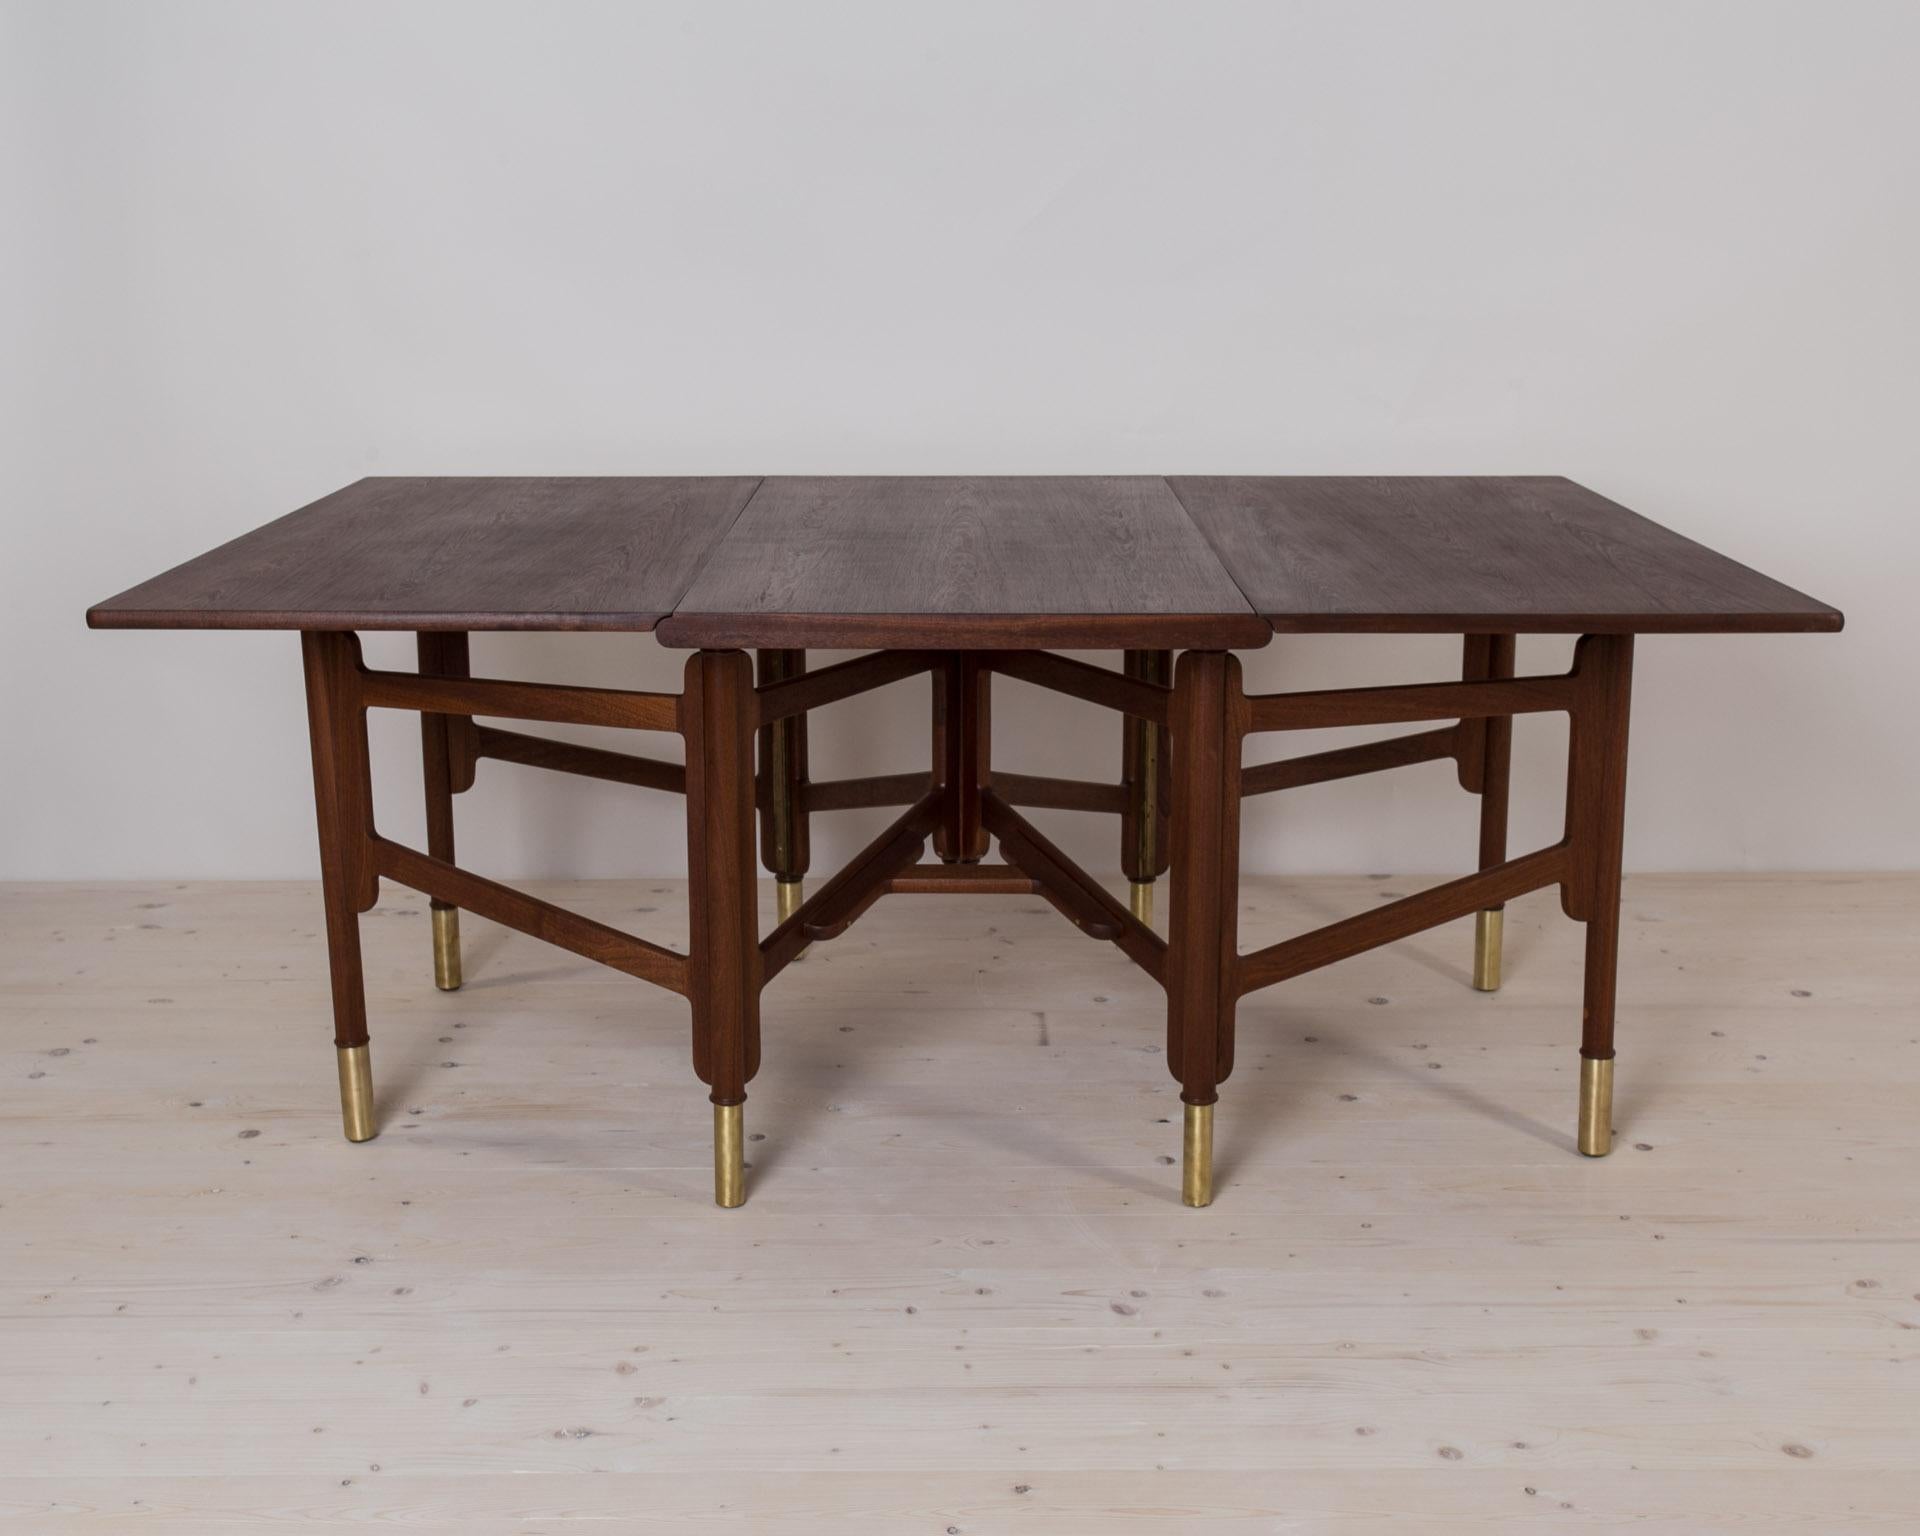 Scandinavian Modern Midcentury Dining Table, Teak Wood, Brass Elements, Norway, 1950s For Sale